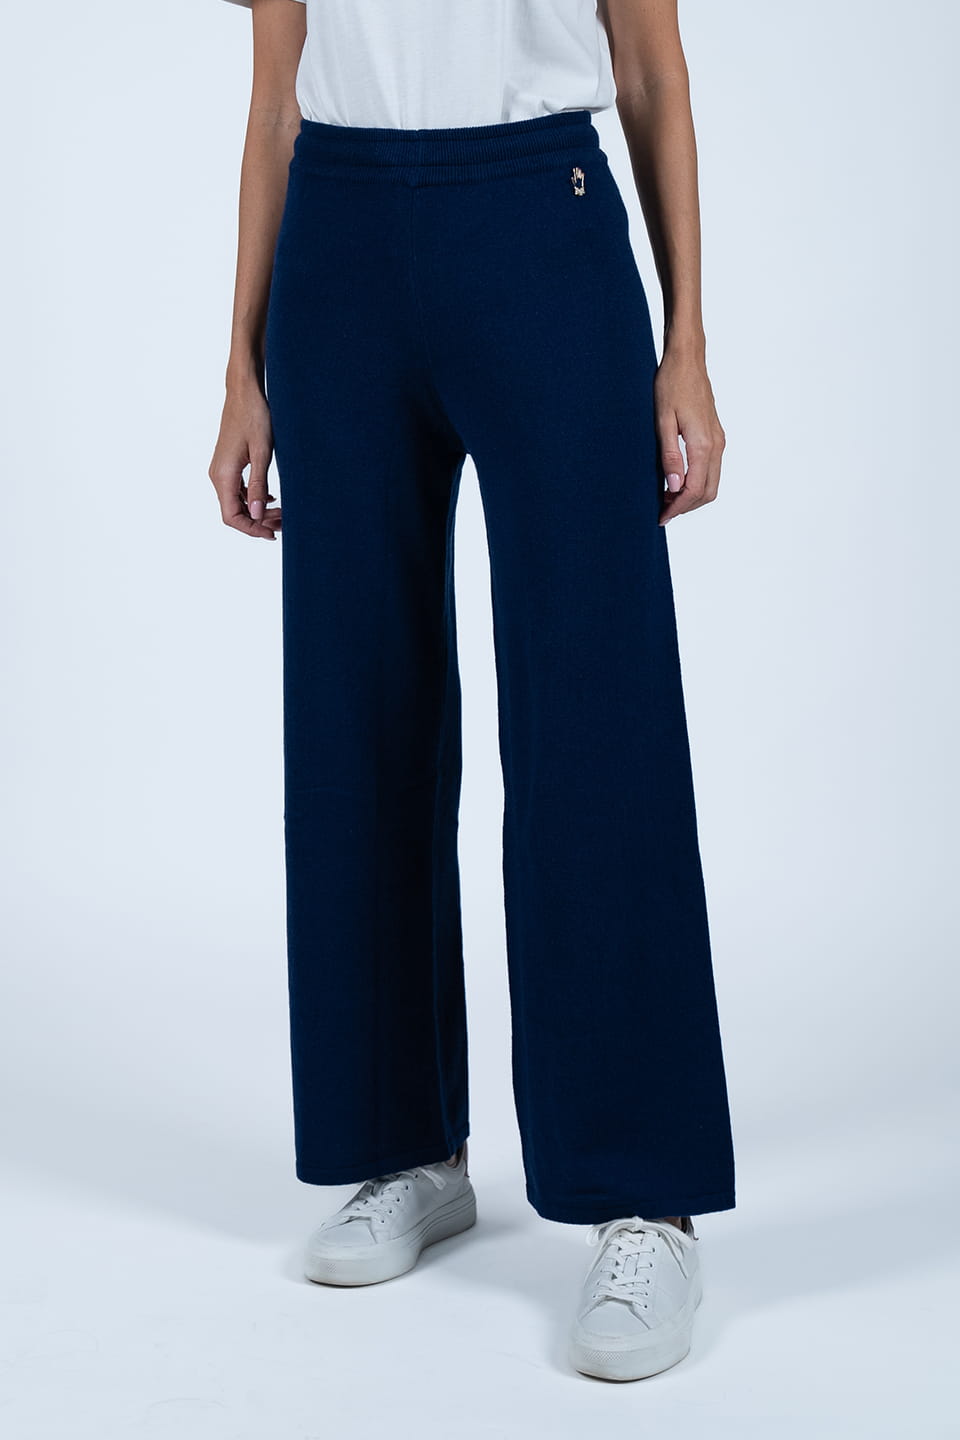 Shop online trendy Blue Women pants from Vivetta Fashion designer. Product gallery 1